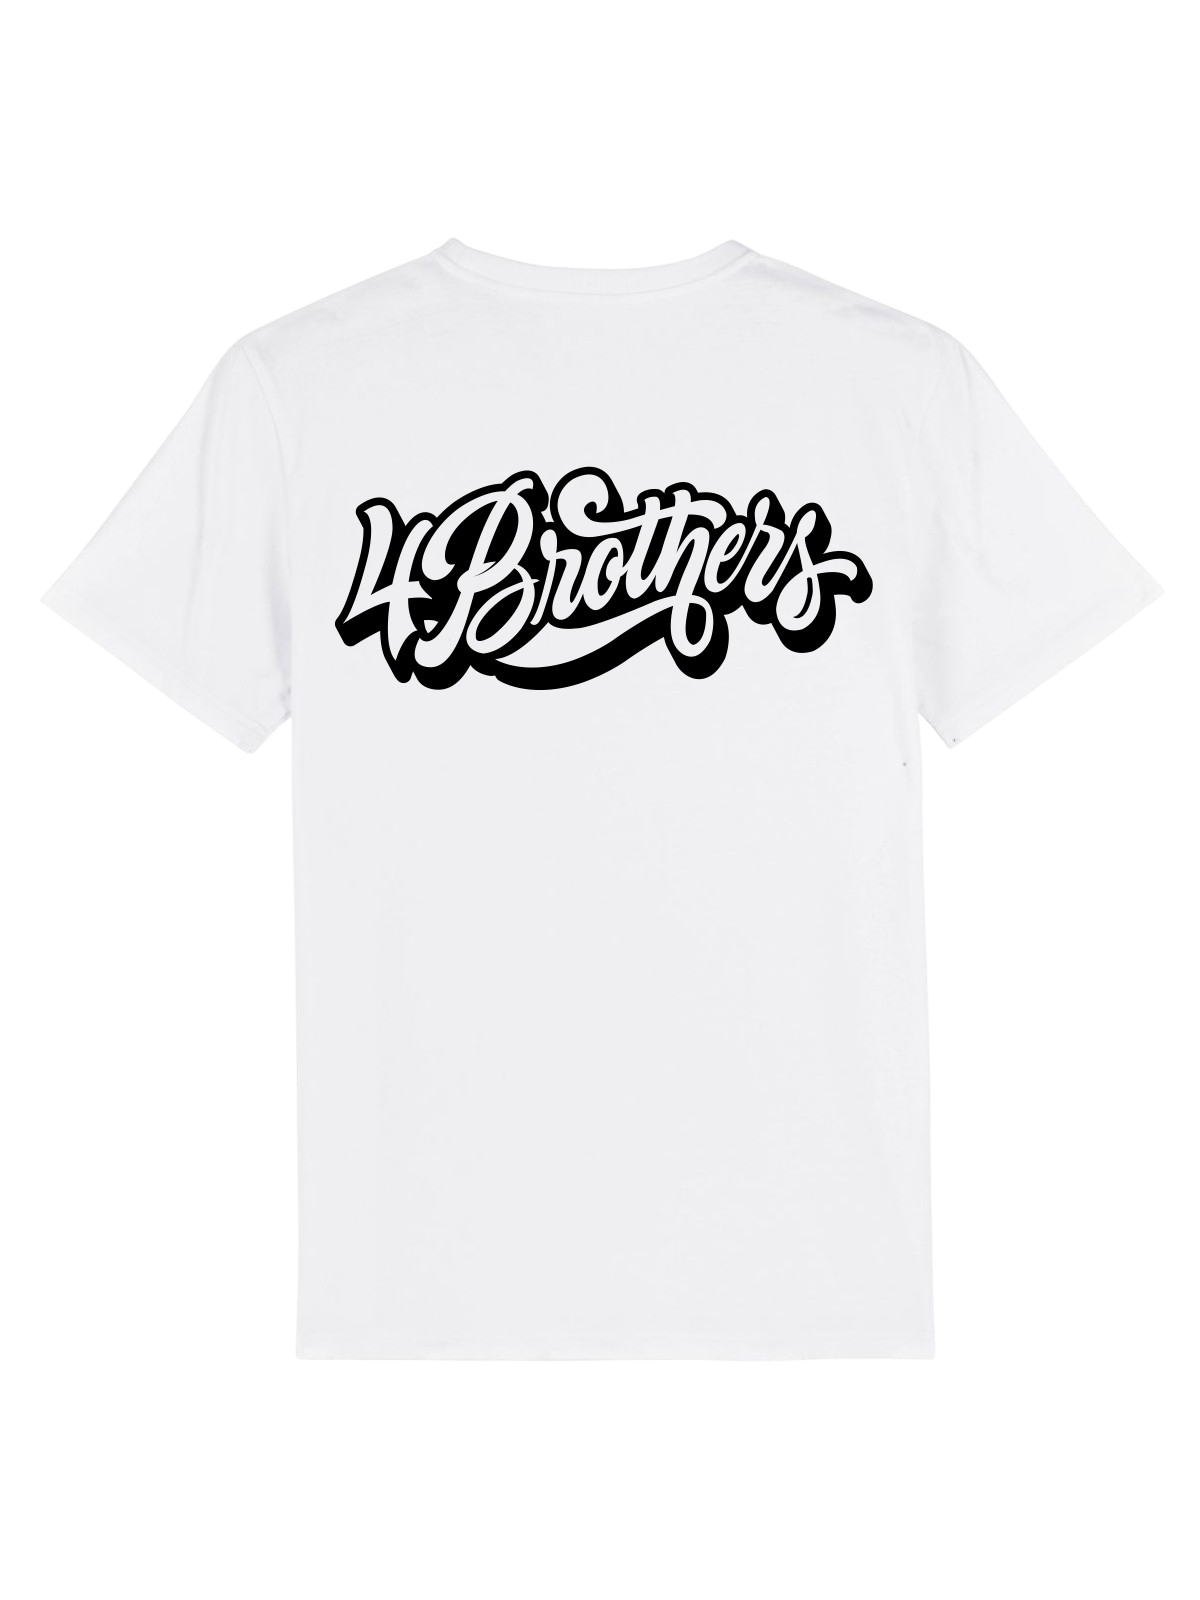 4Brothers T-Shirt comic font T-Shirt New White 5XL